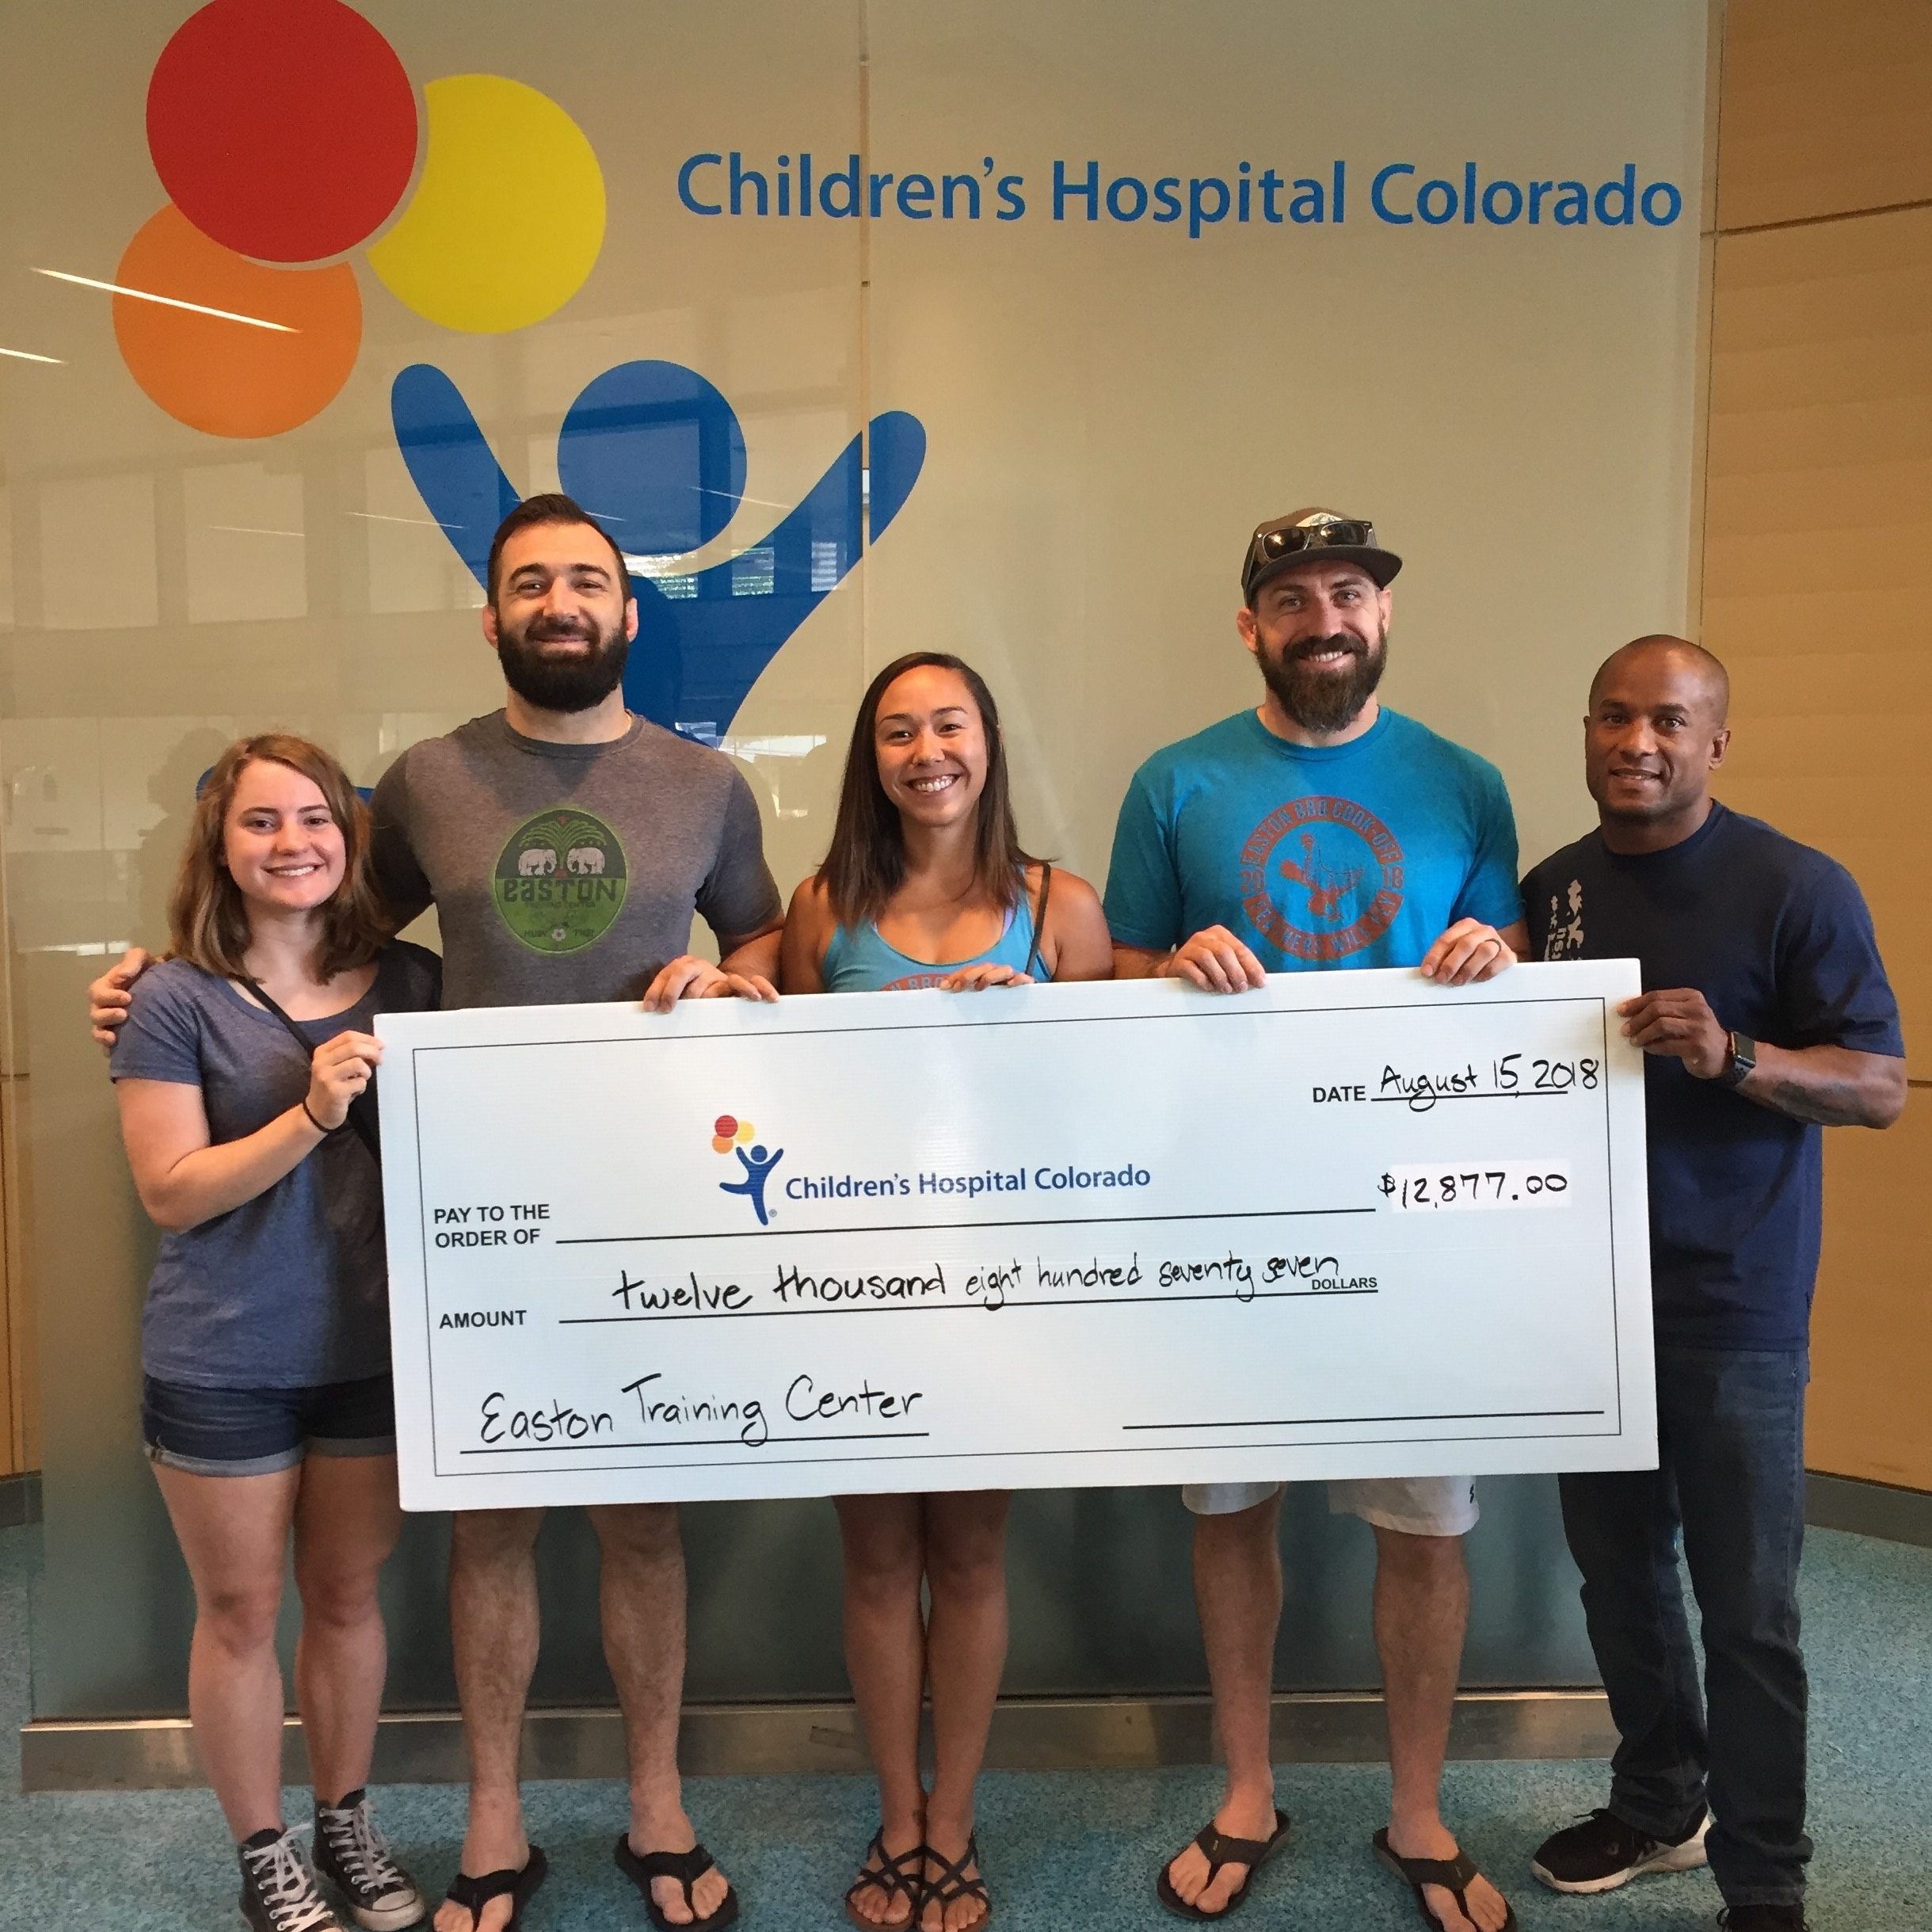 Easton Training Center staff present a donation check for $12,877 to Children's Hospital Colorado.